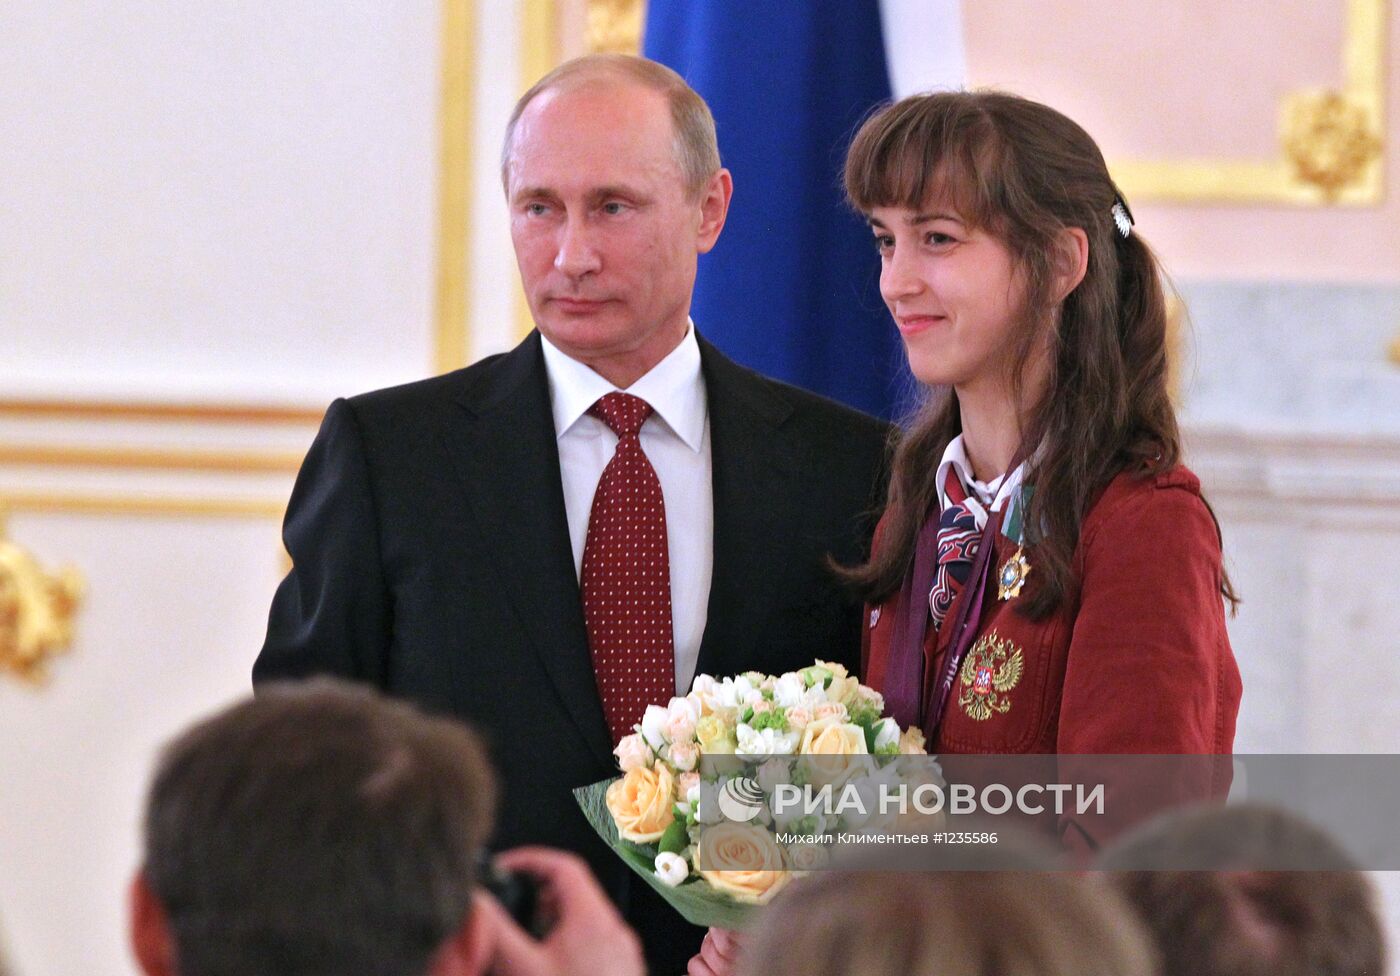 В.Путин вручил госнаграды паралимпийцам, завоевавшим "золото"